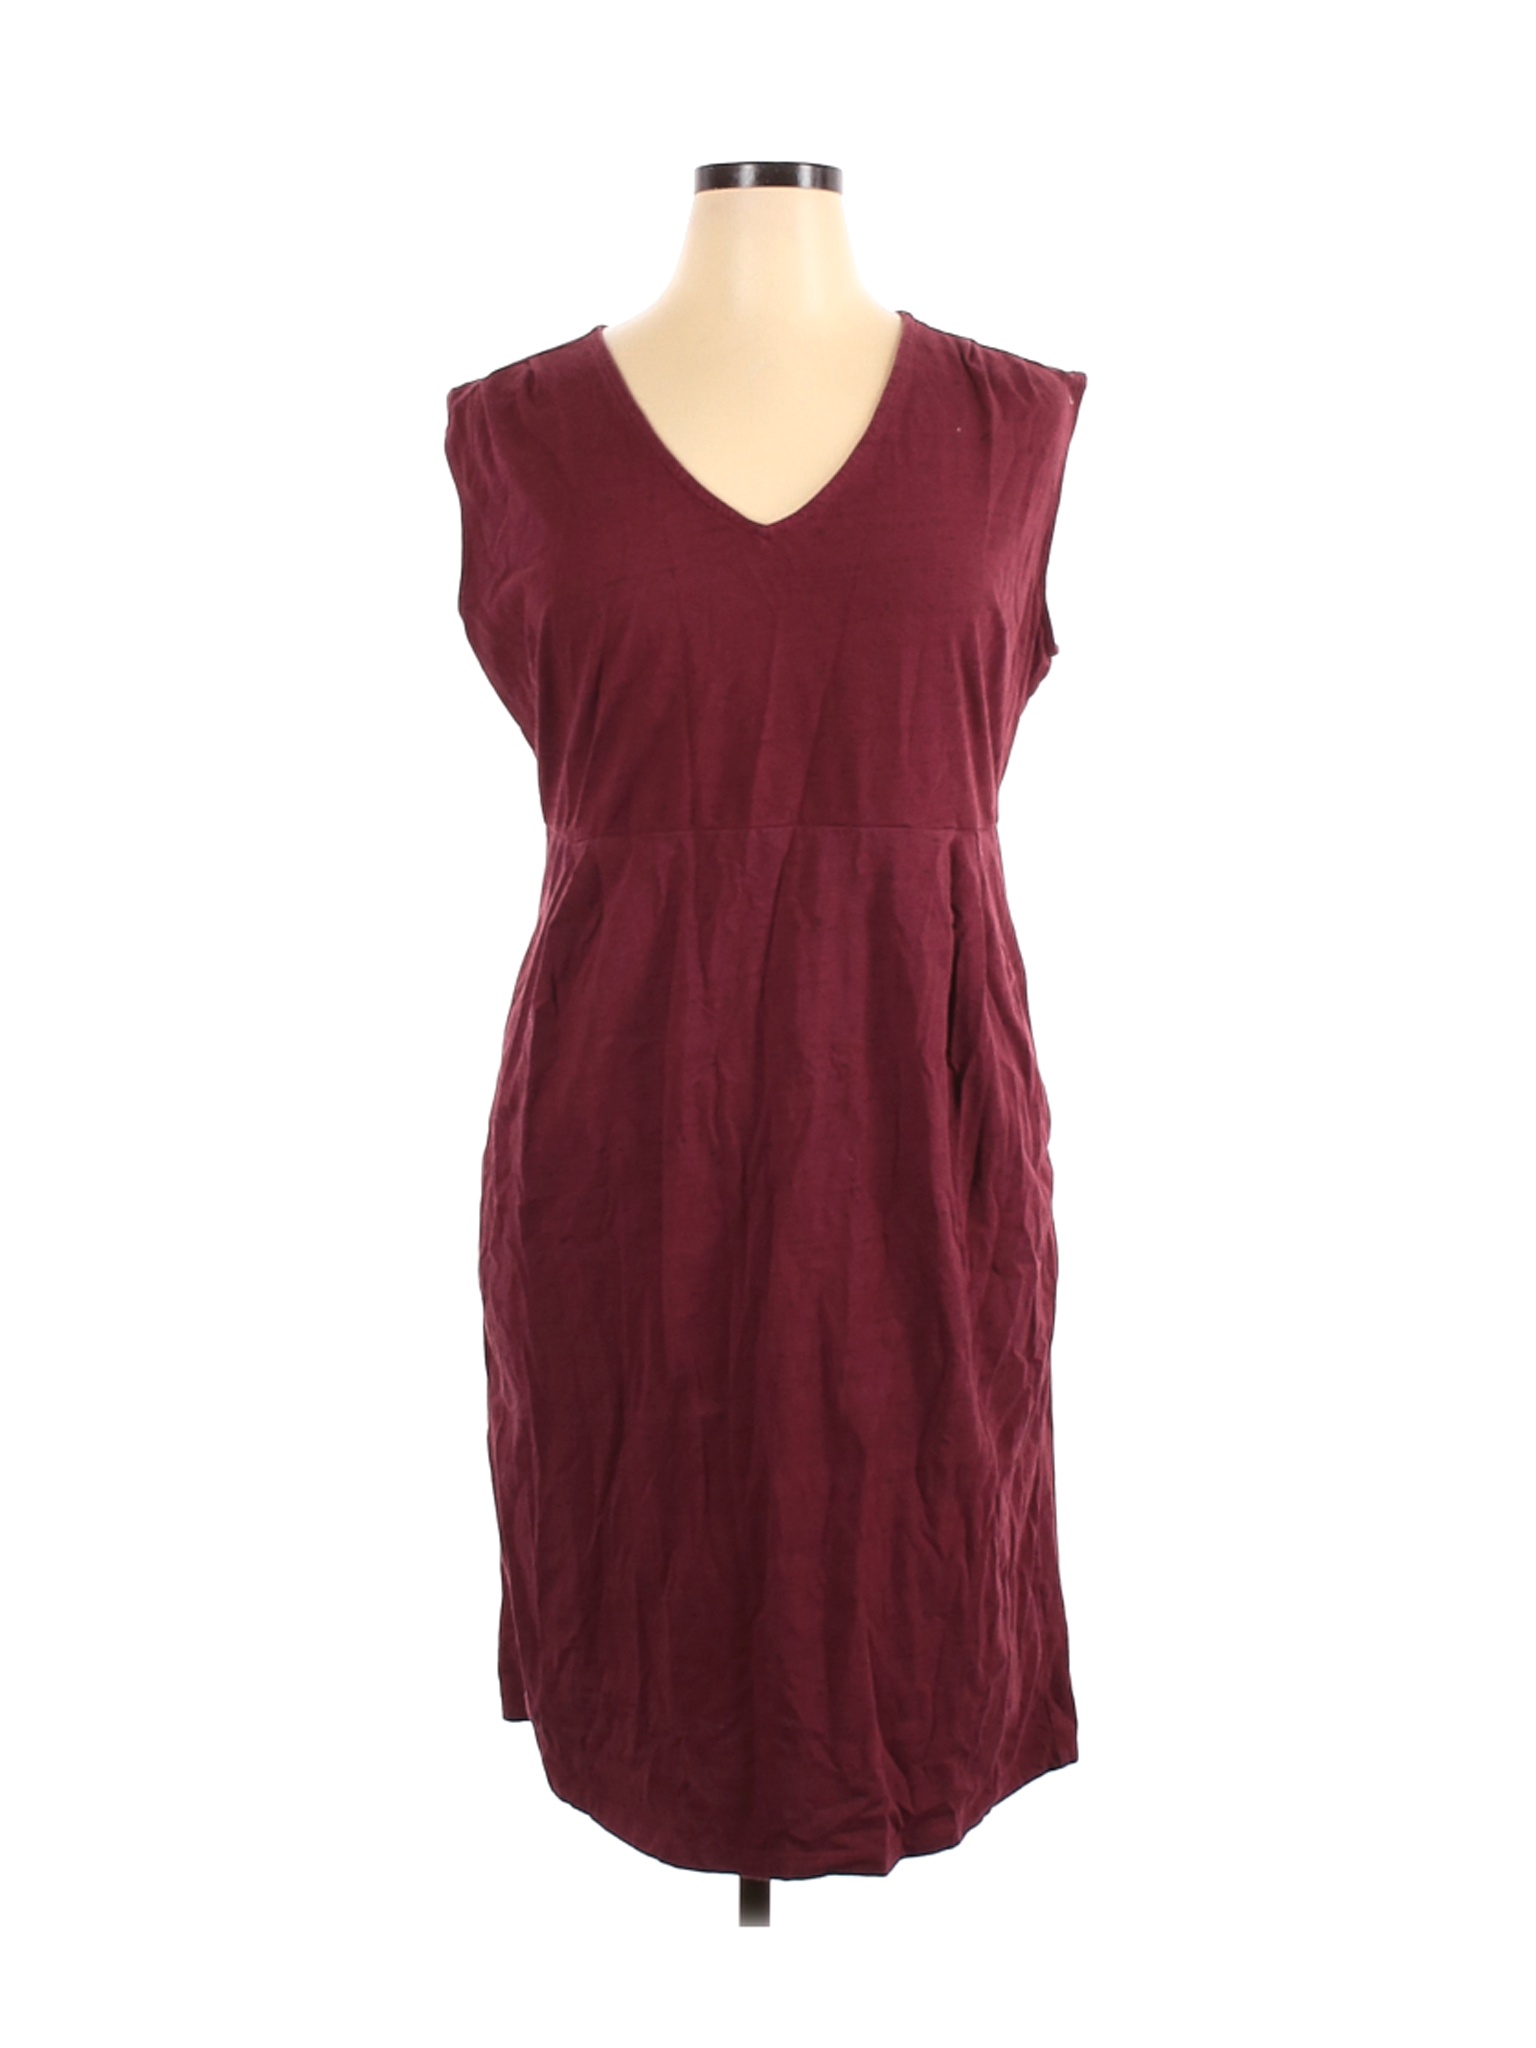 Old Navy Women Red Casual Dress 1X Plus | eBay